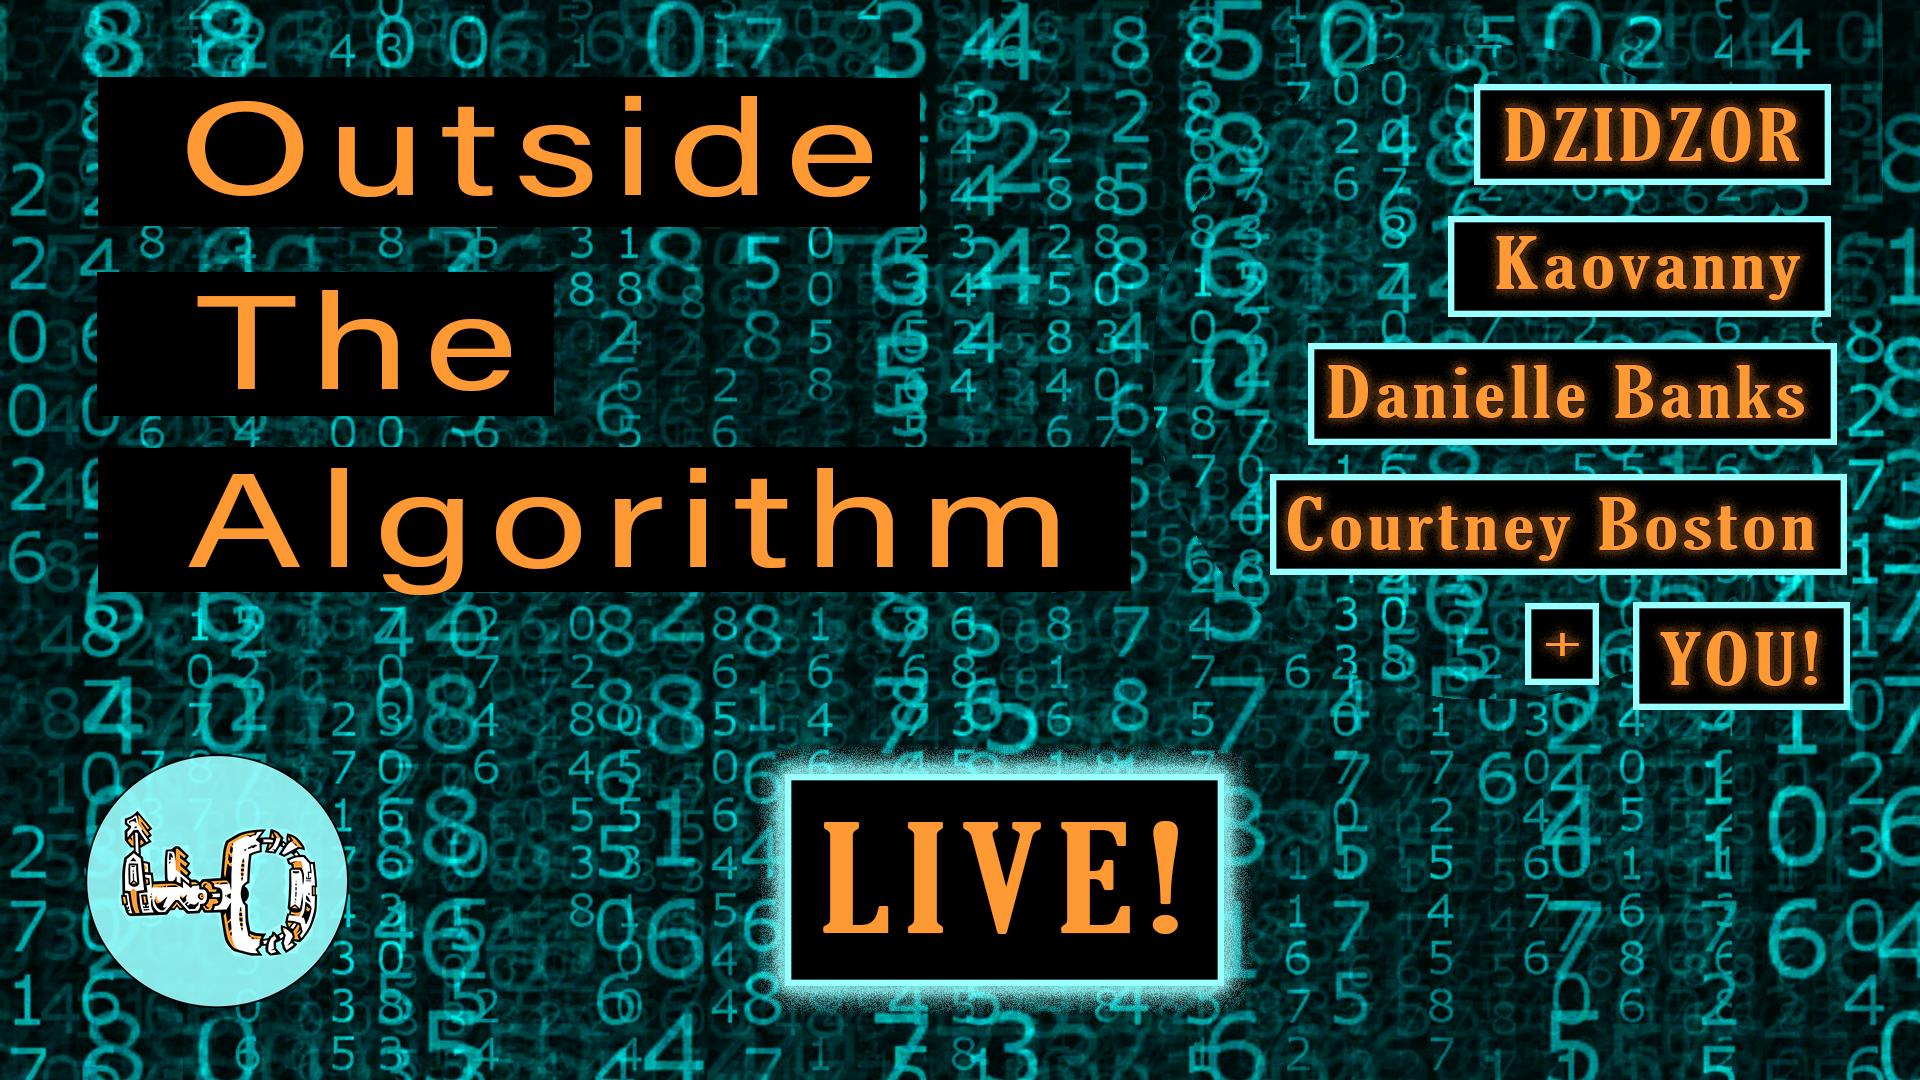 Outside The Algorithm LIVE flyer DZIDZOR, Kaovanny, Courtney Boston, Danielle Banks